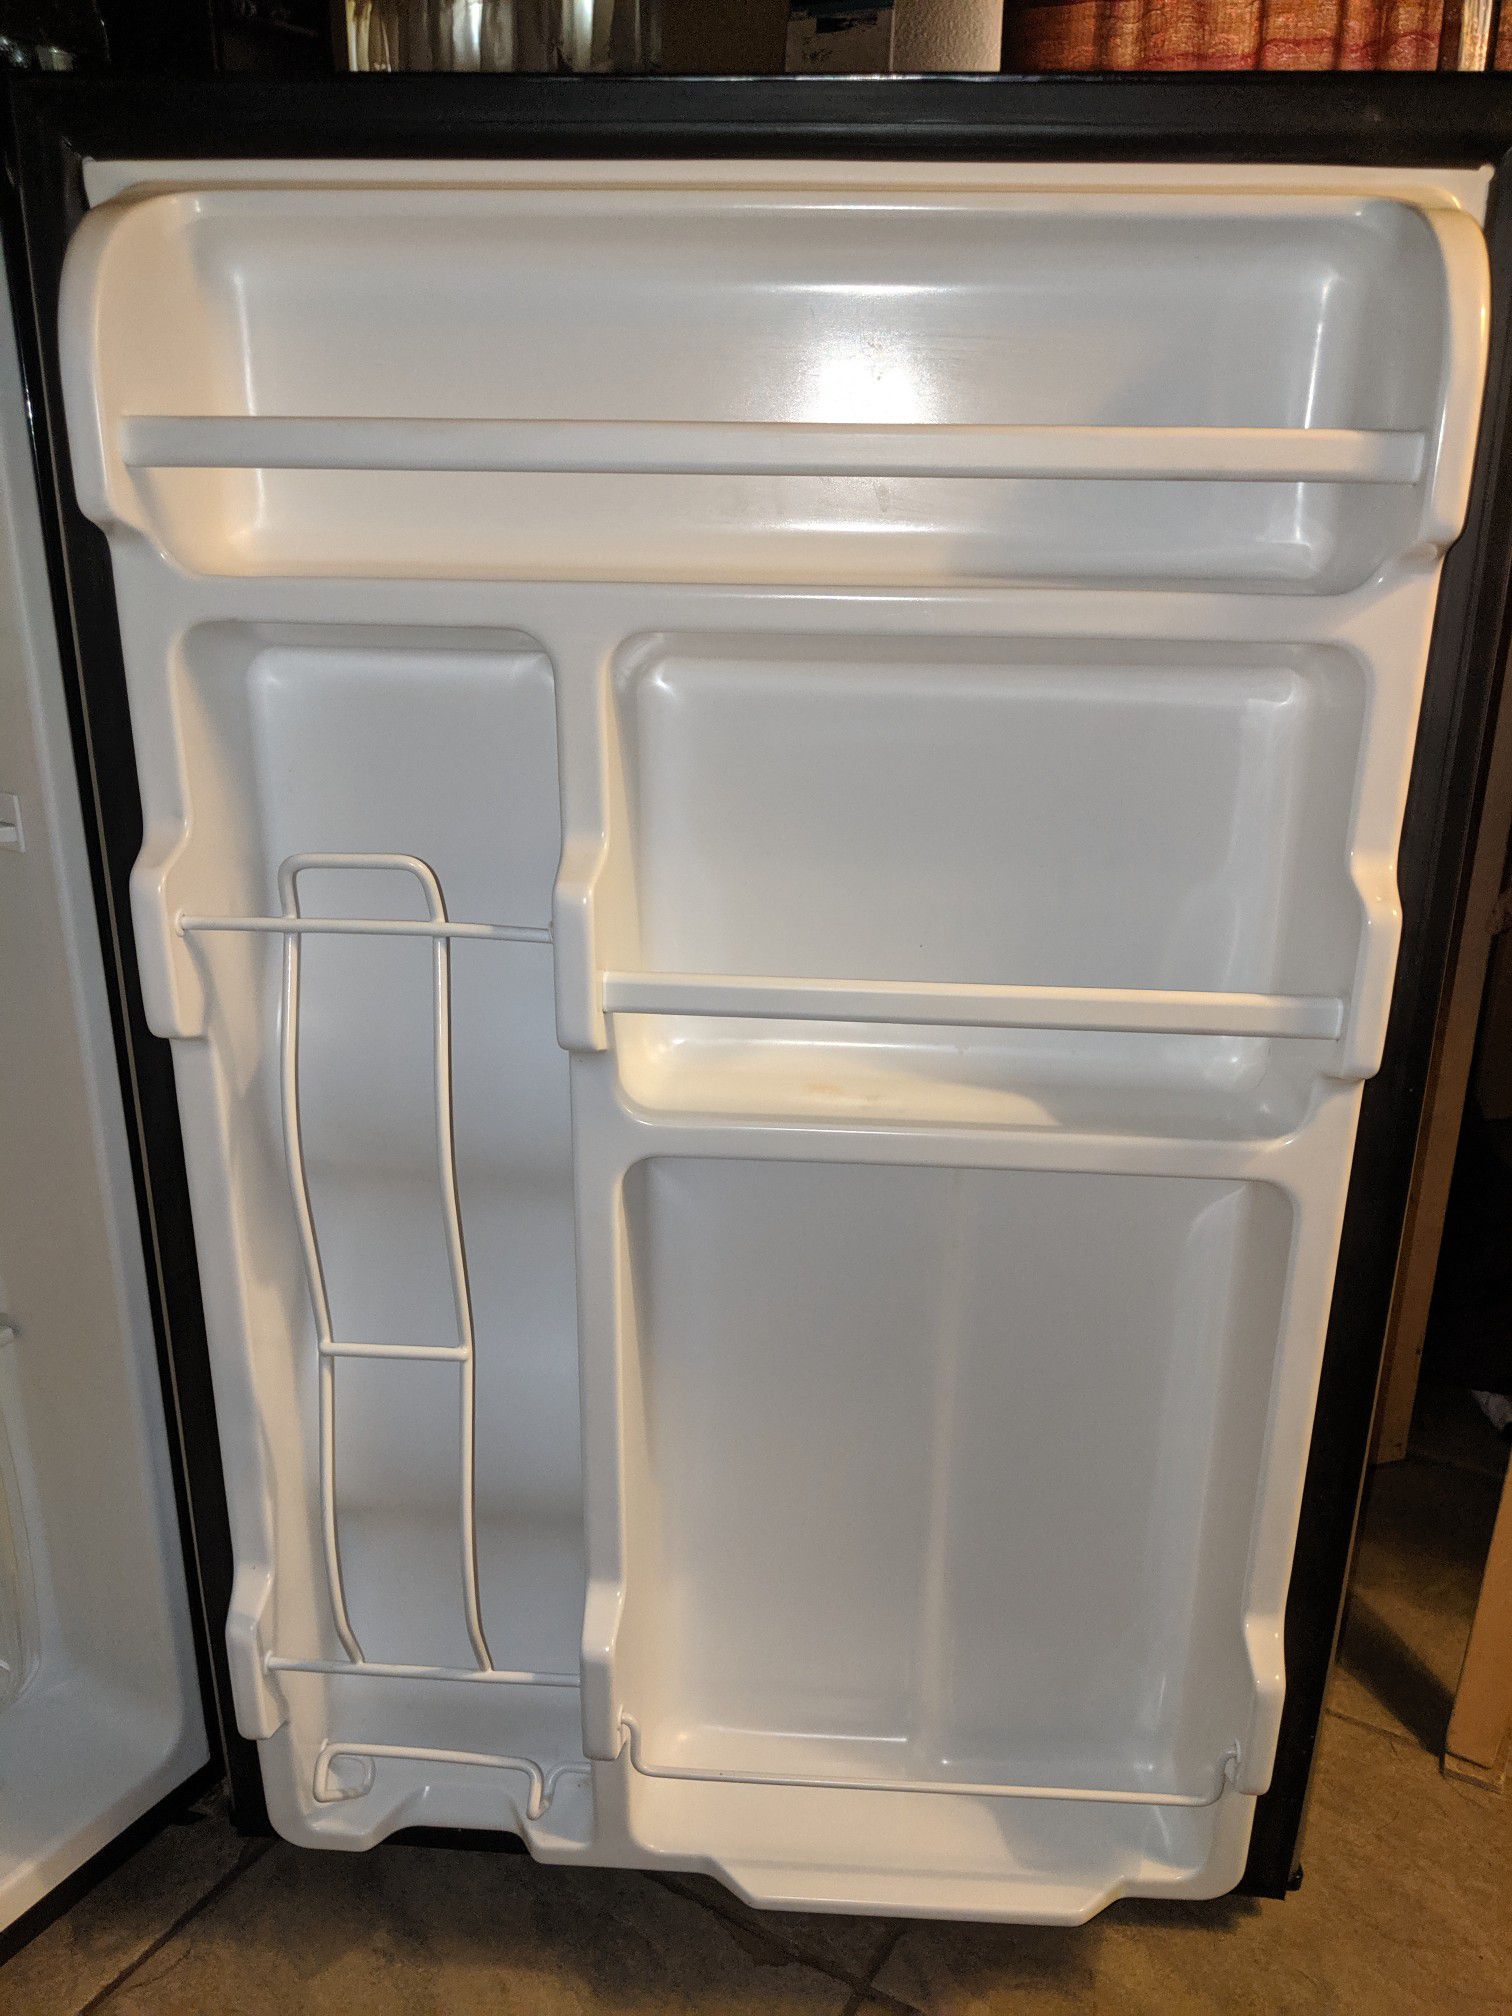 Frigidaire FFPH44M4LM 4.4 cu. ft. Compact Refrigerator with 2